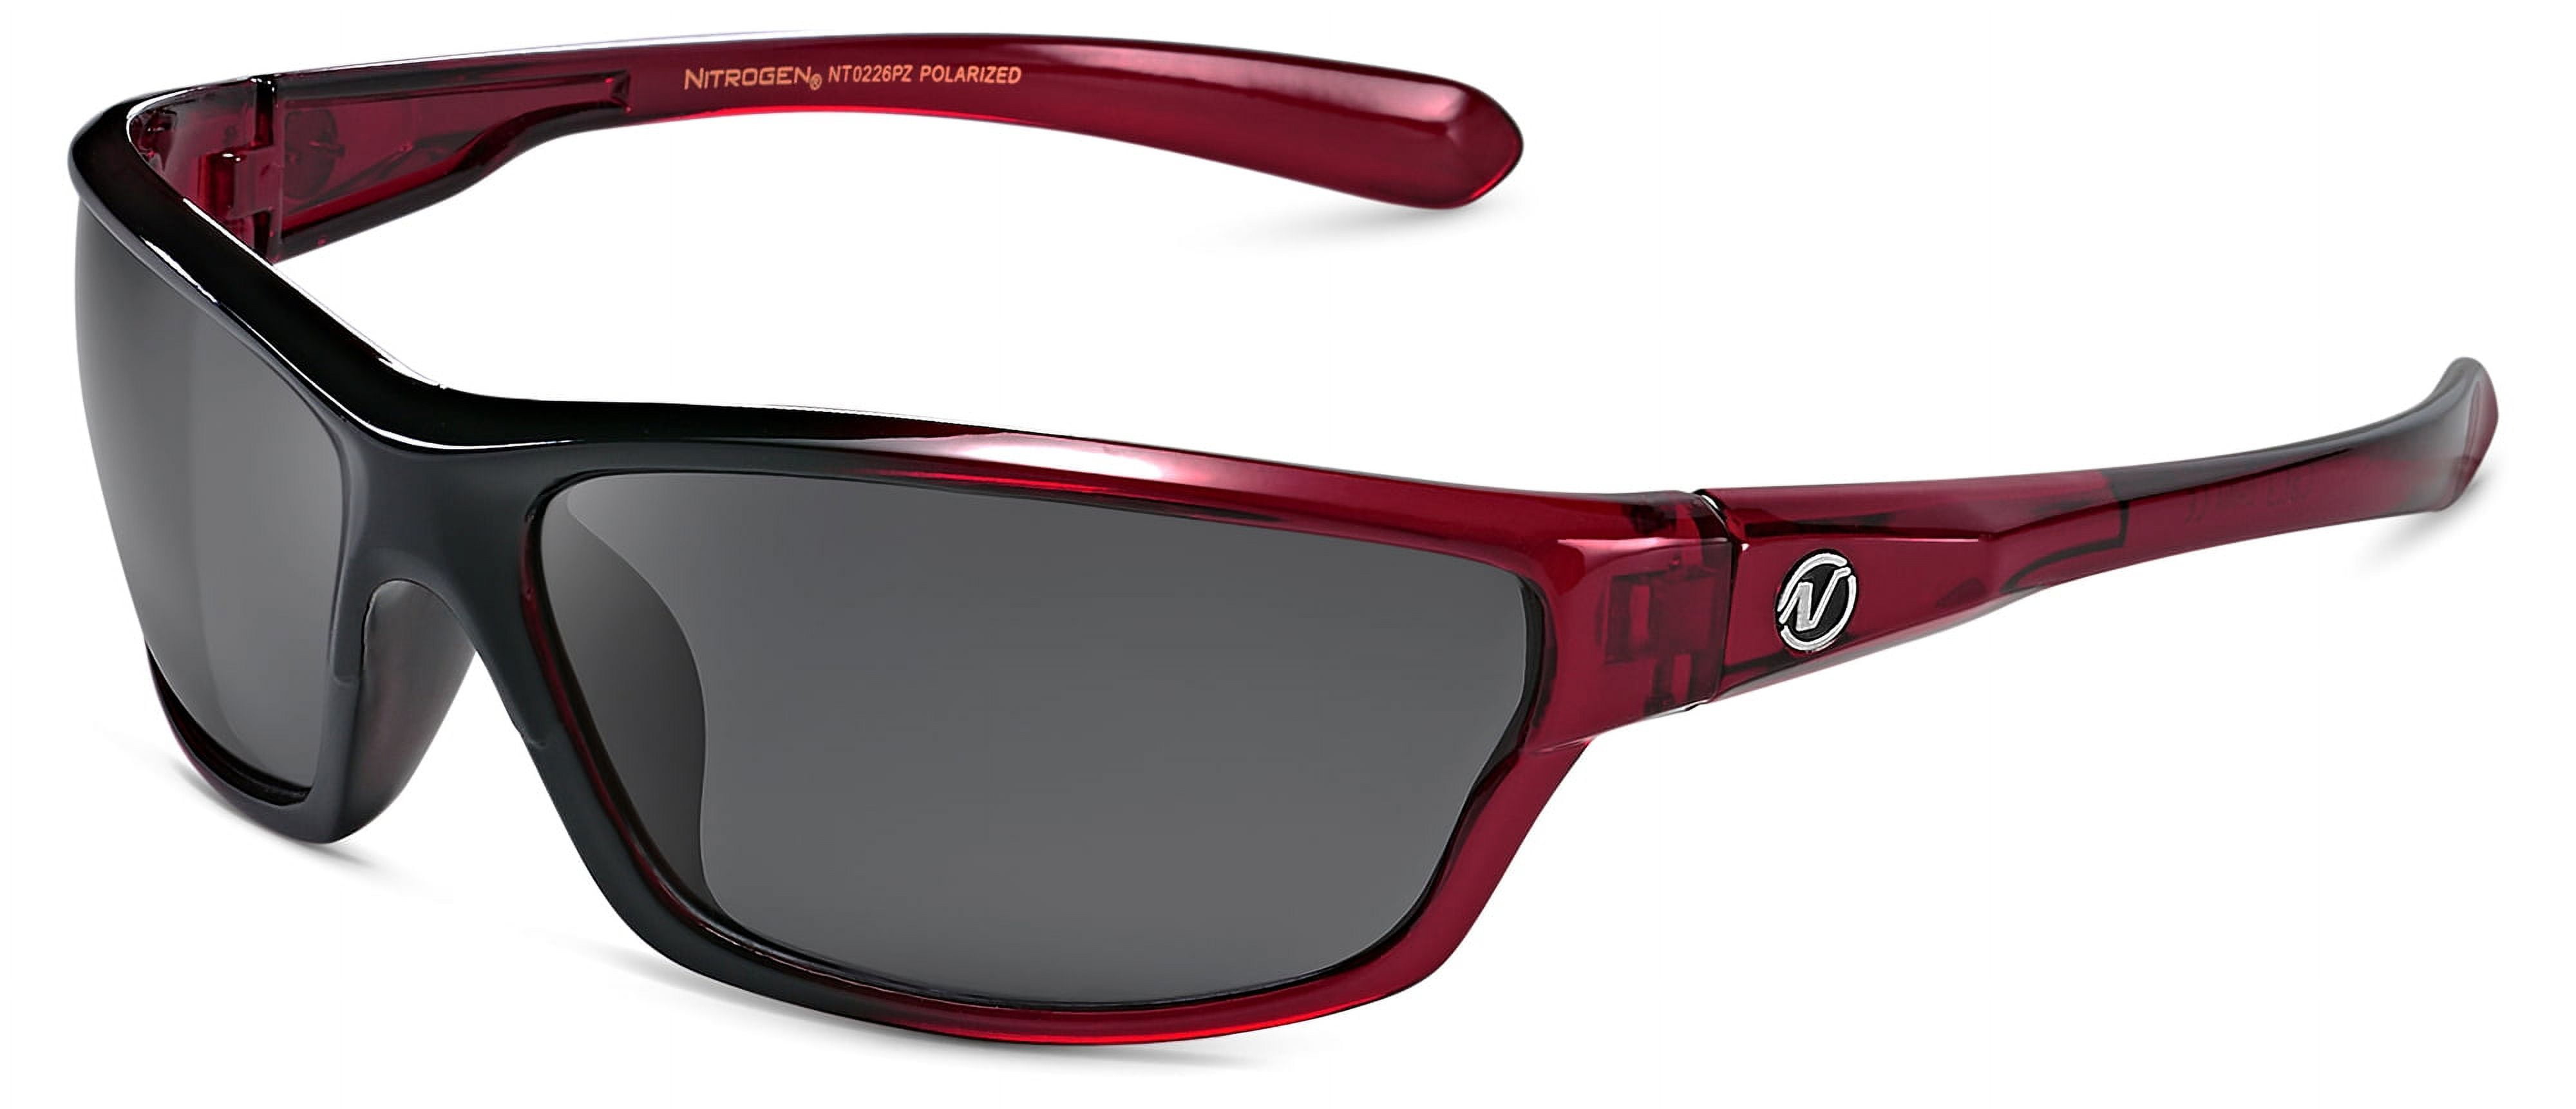 Polarized Wrap Around Sport Sunglasses for Men Women - Driving